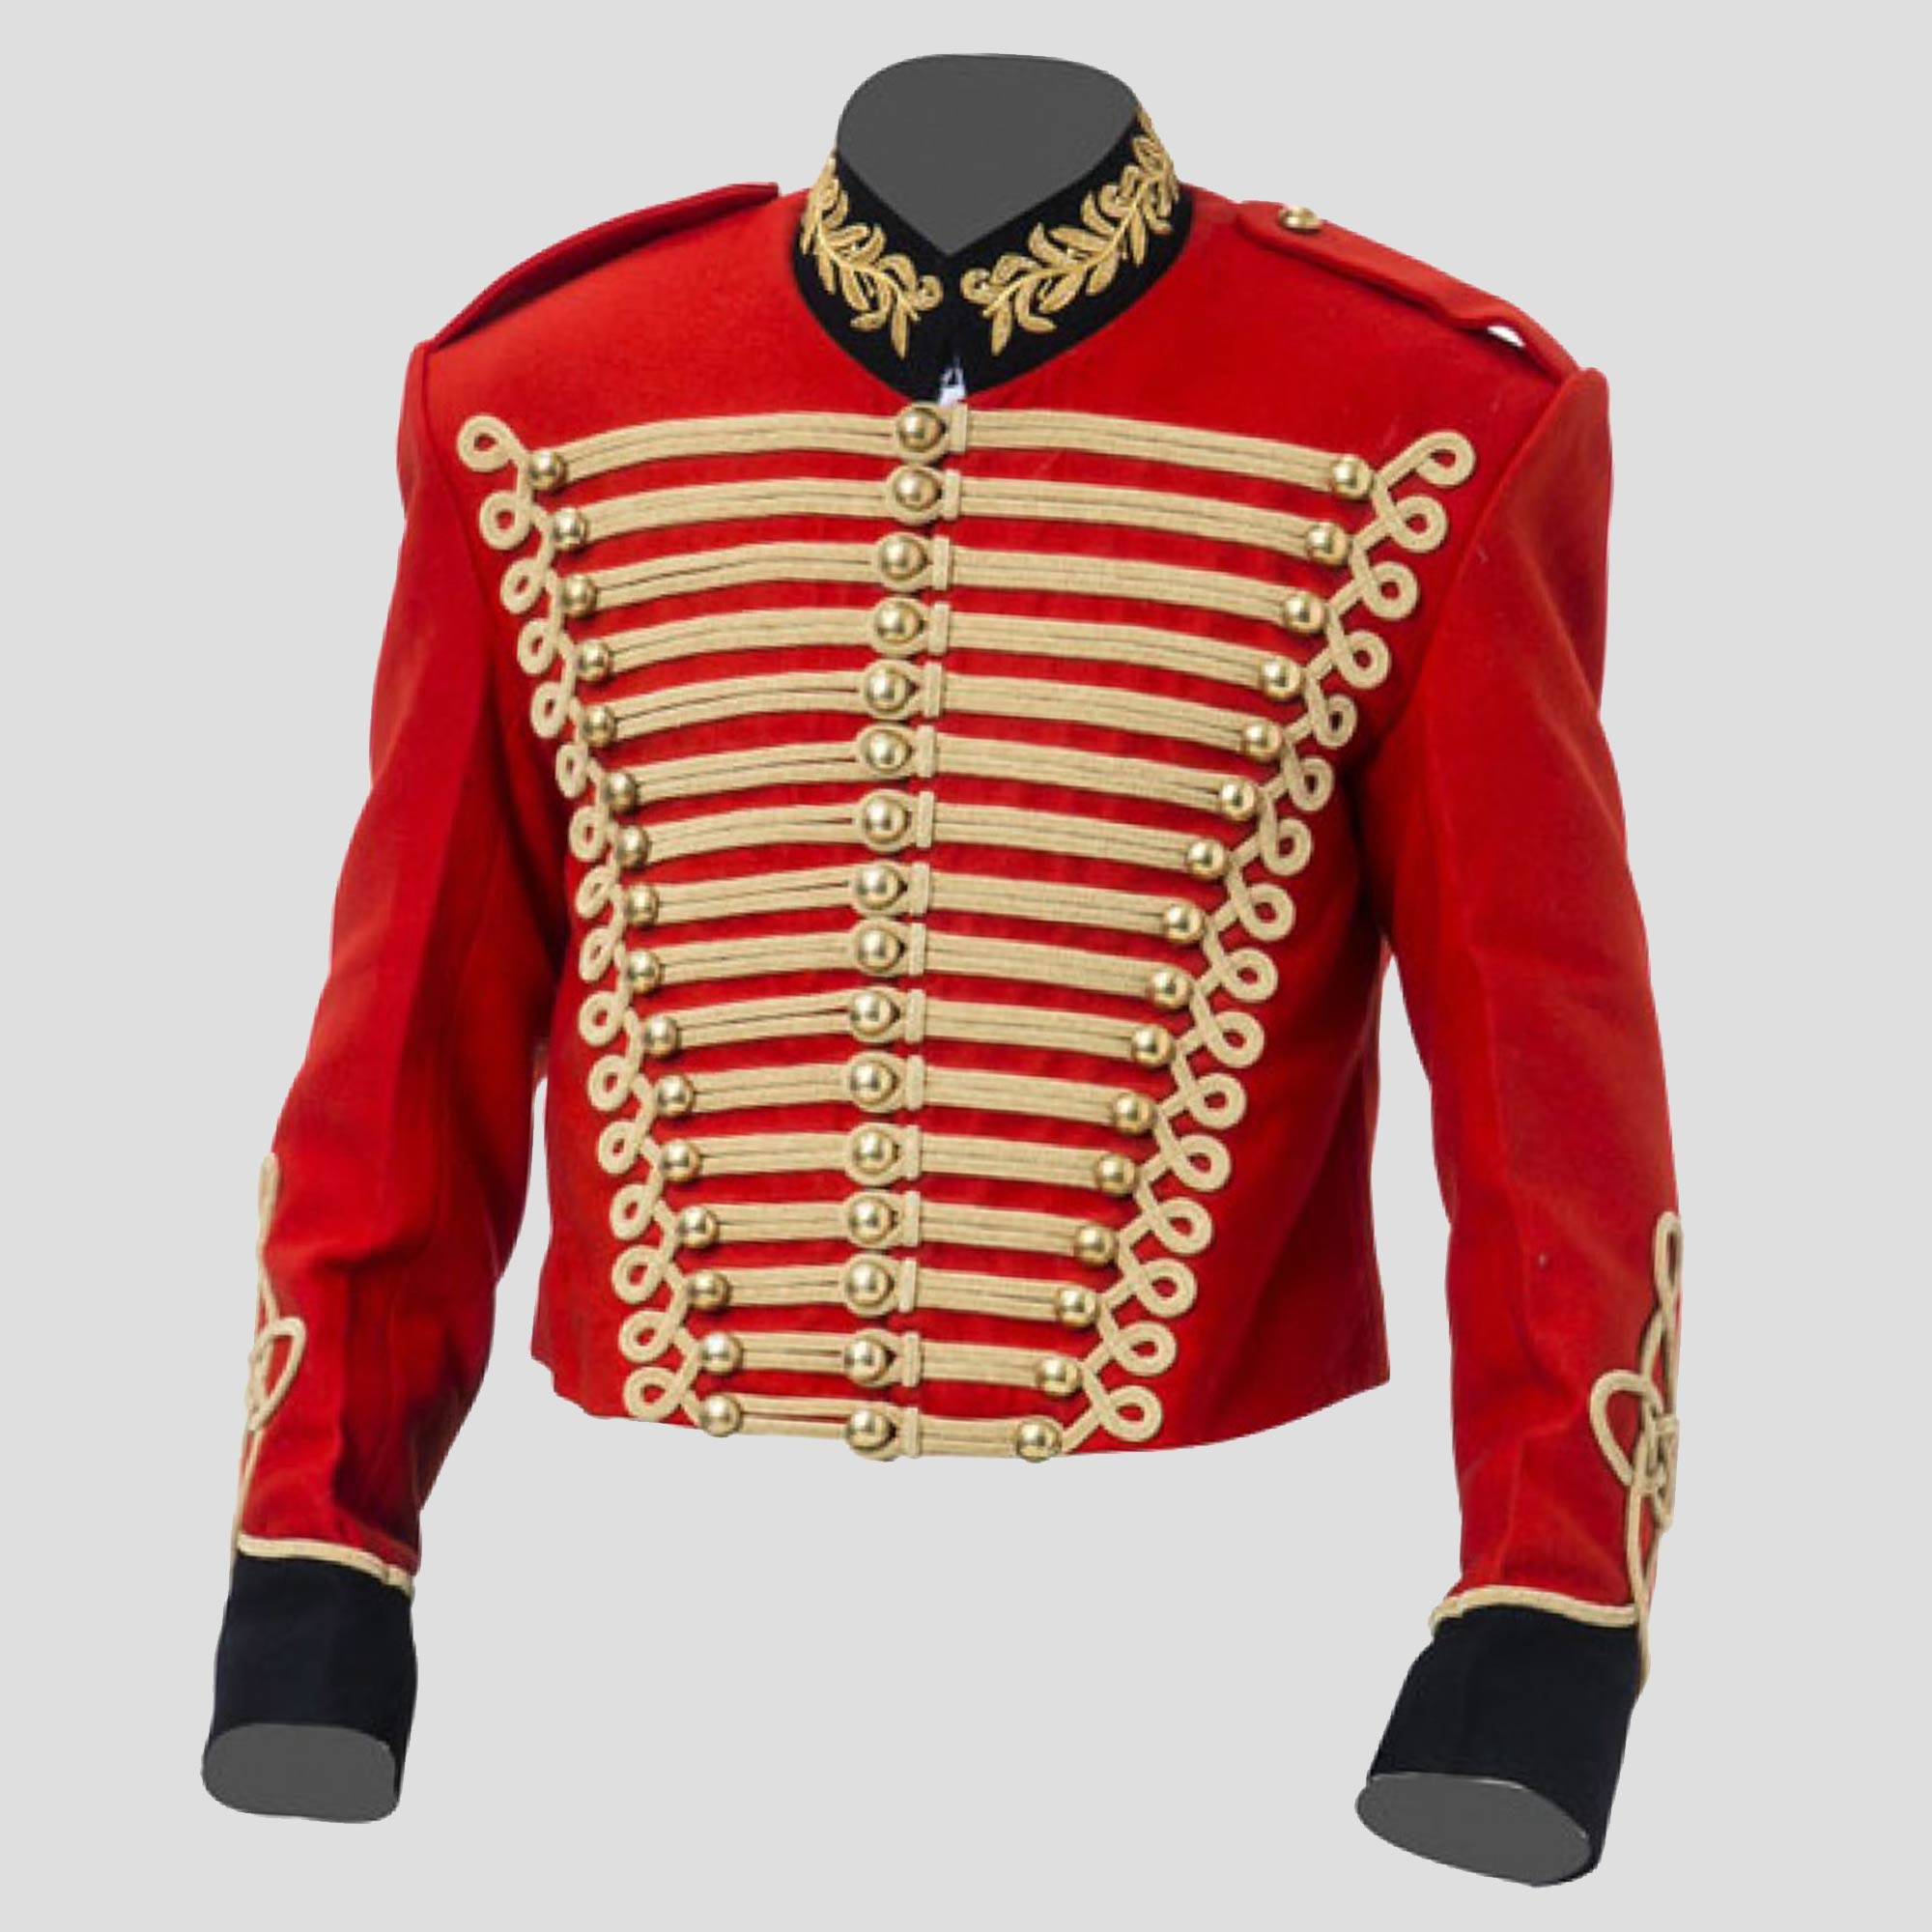 19th century military grade cavalry plisse jacket